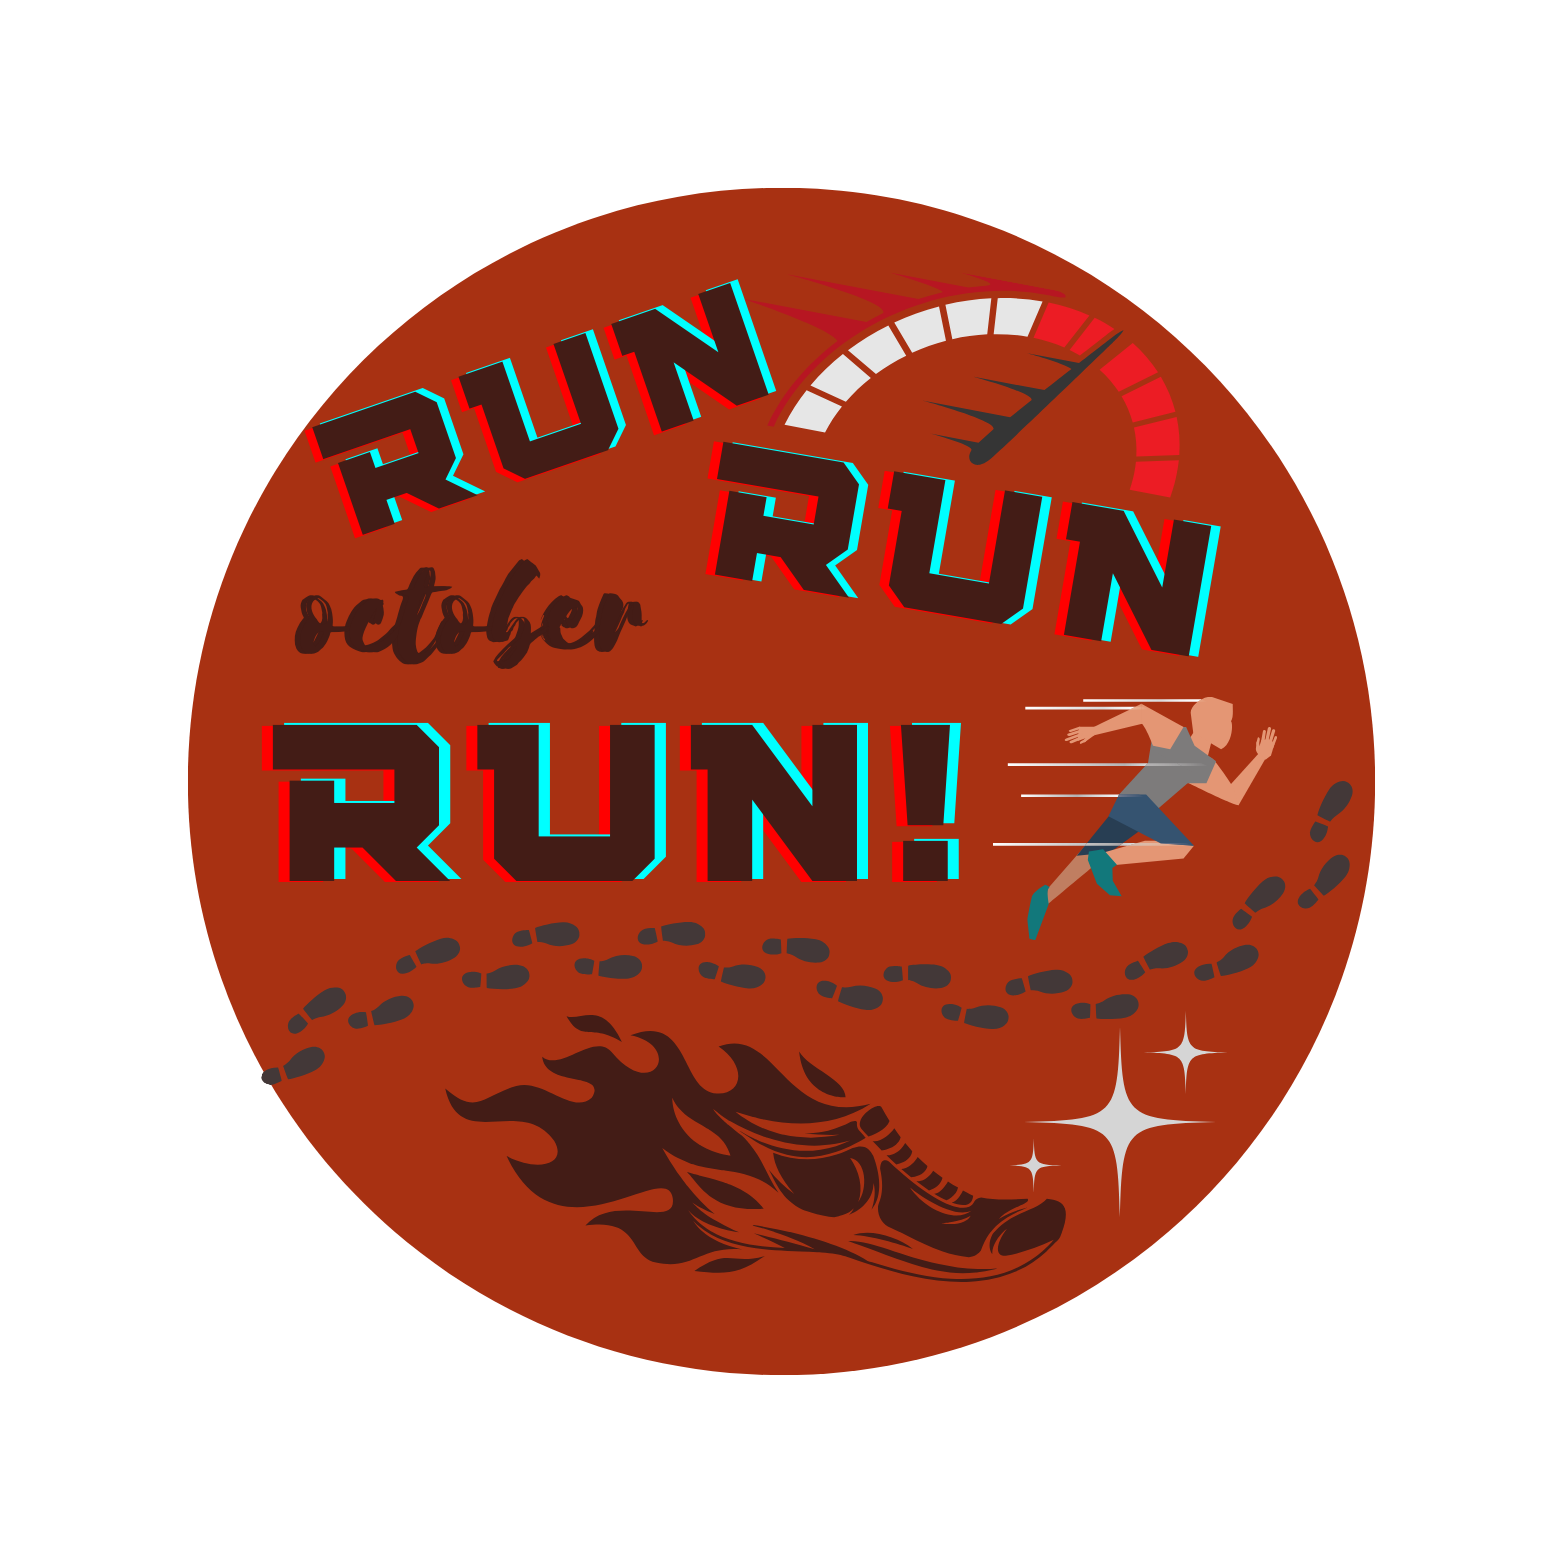 Run, run, run in October